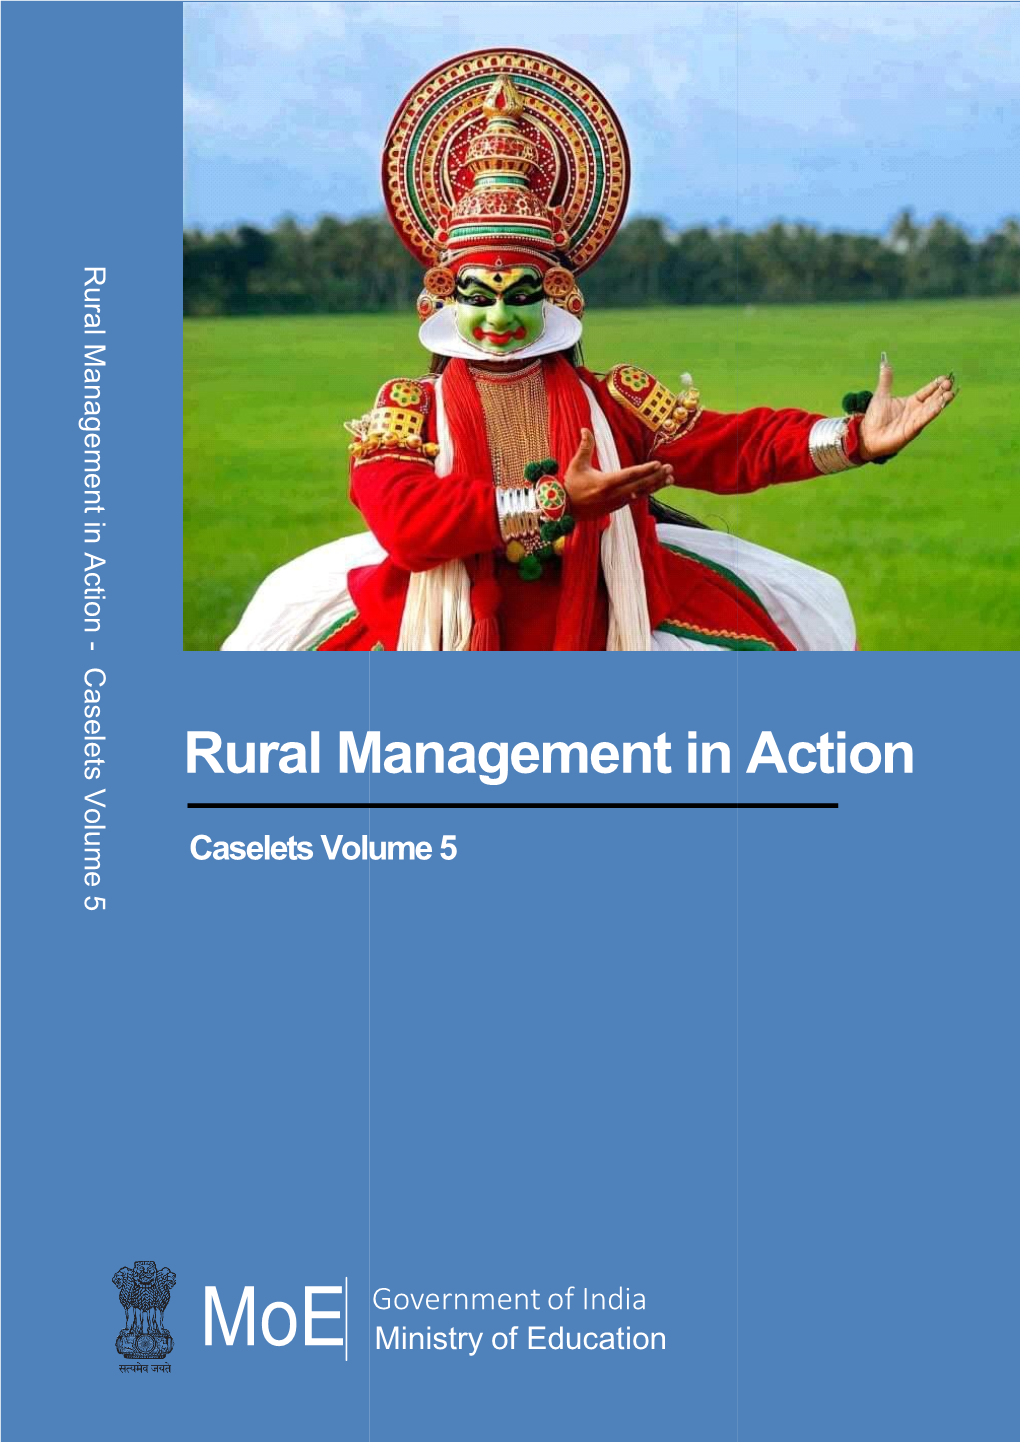 Rural Management in Action- Caselets Volume 5